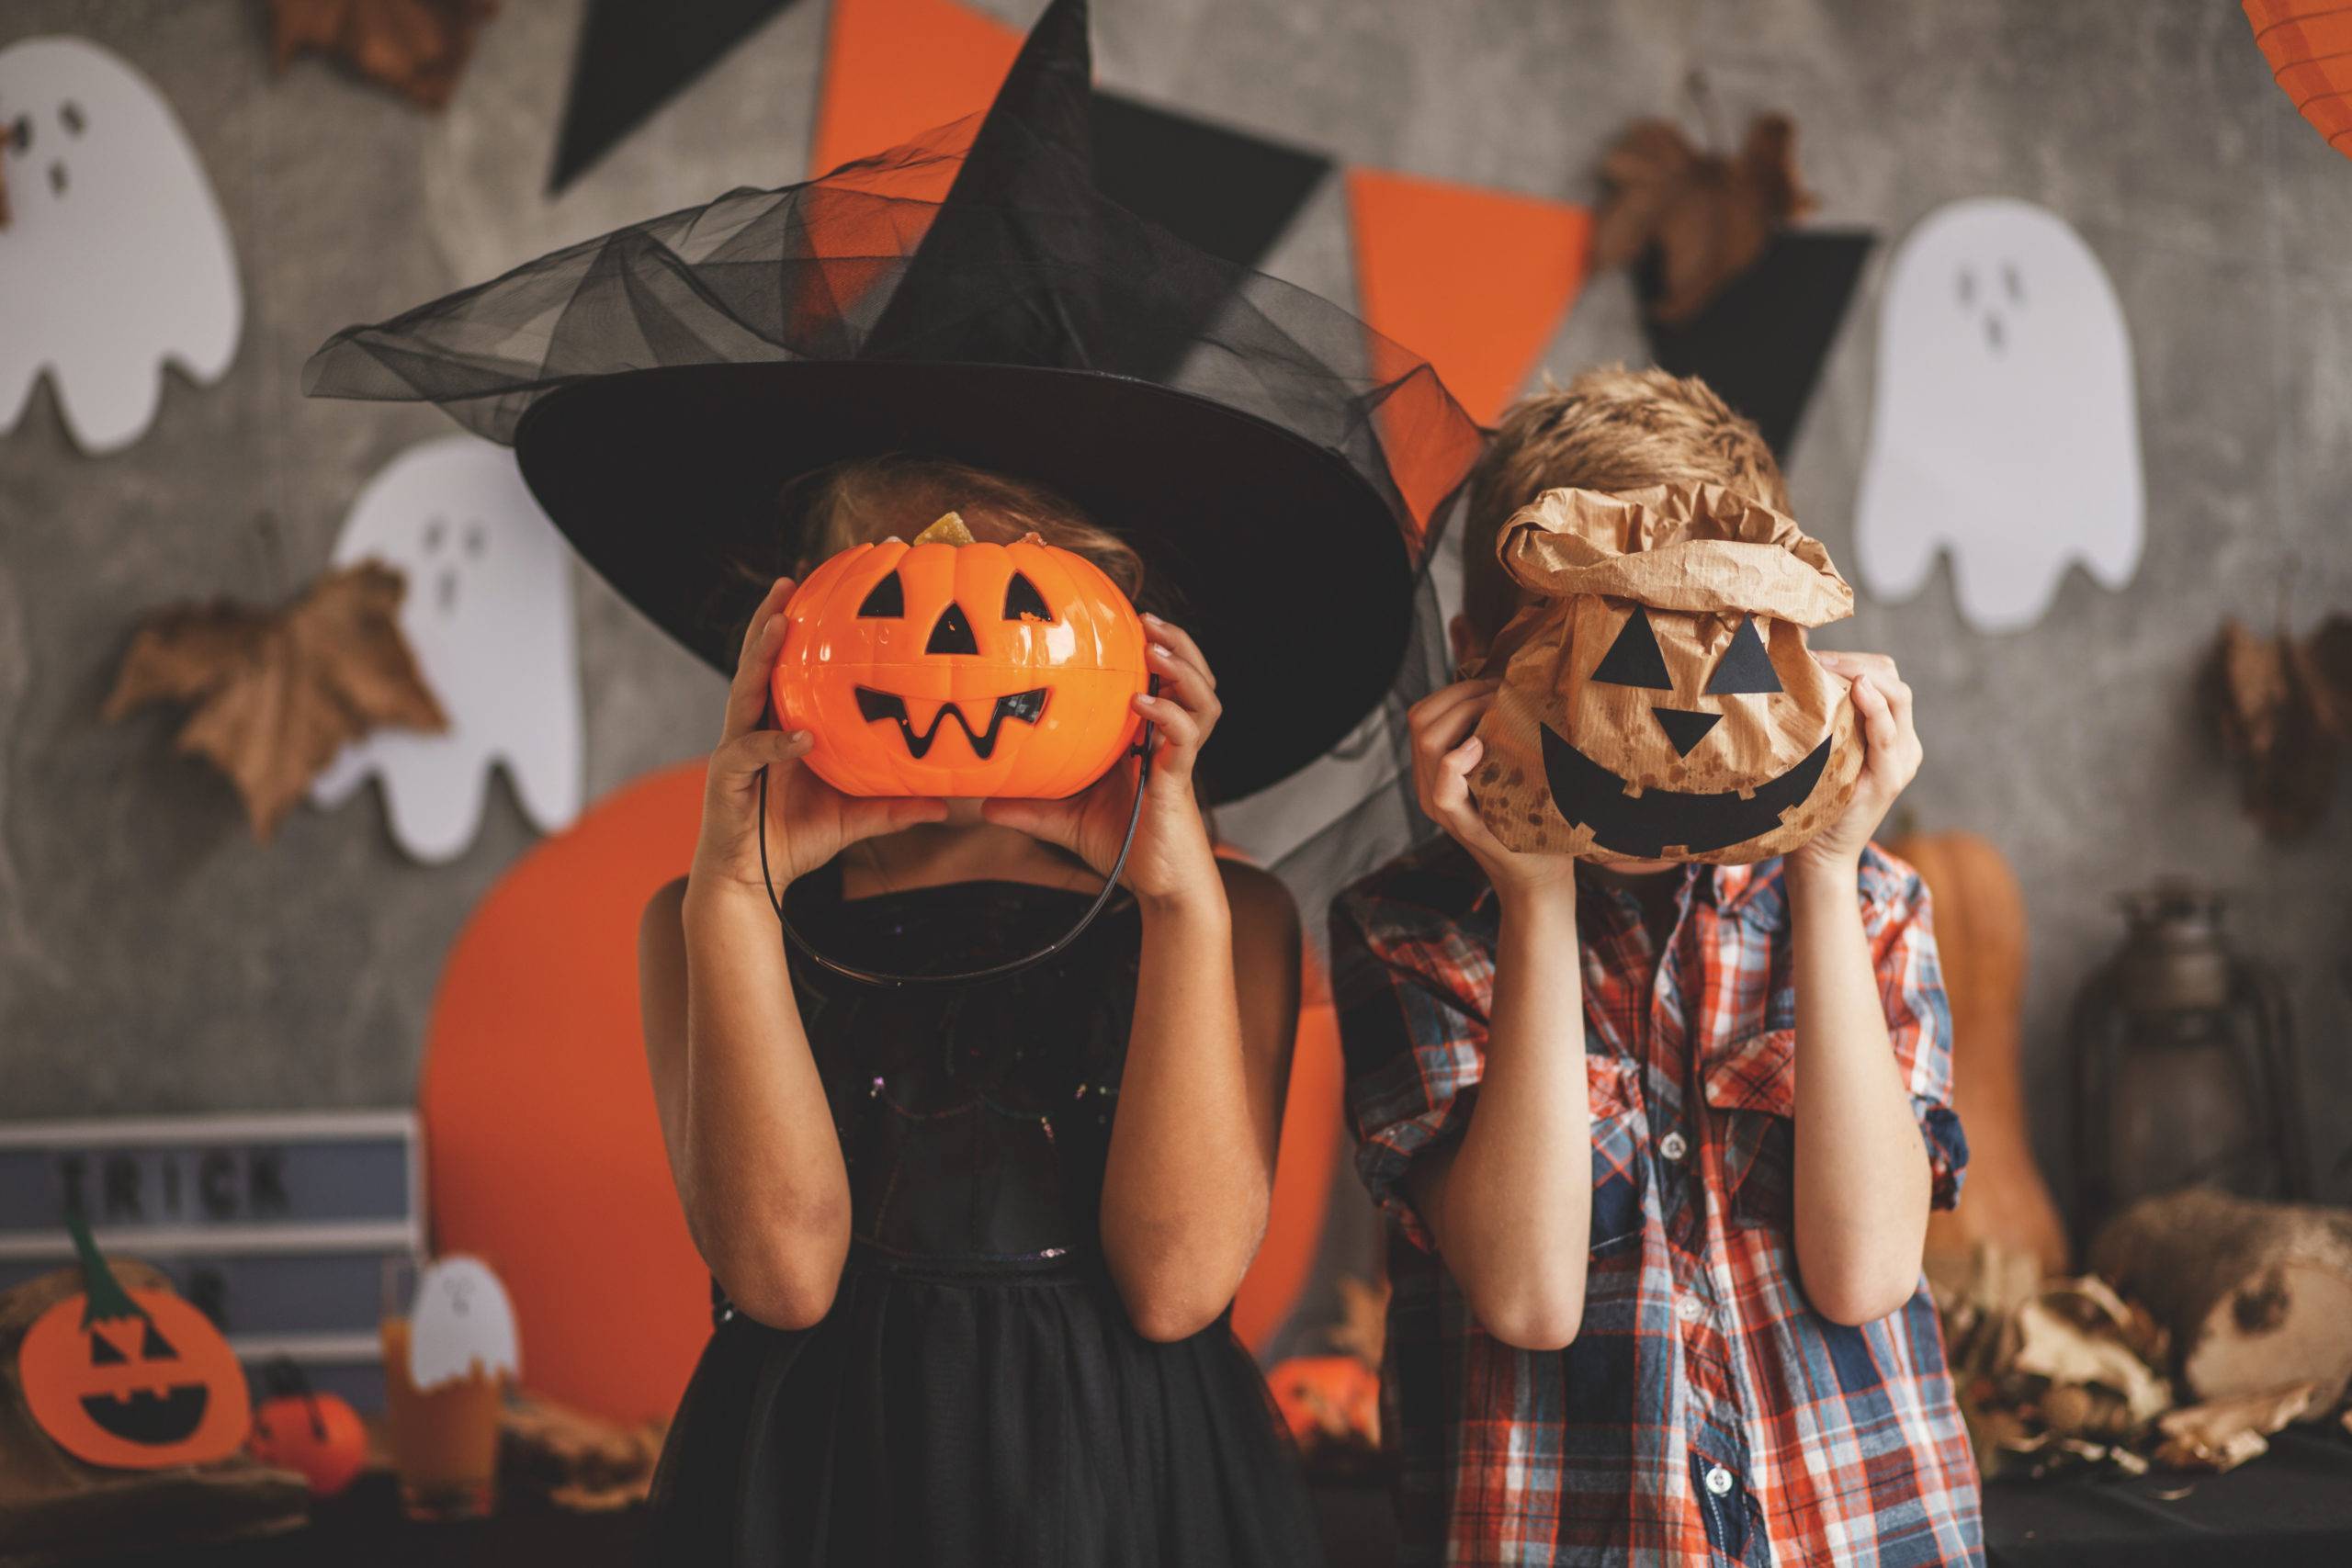 Happy halloween! поговорим об ужасно интересном празднике - хеллоуин?